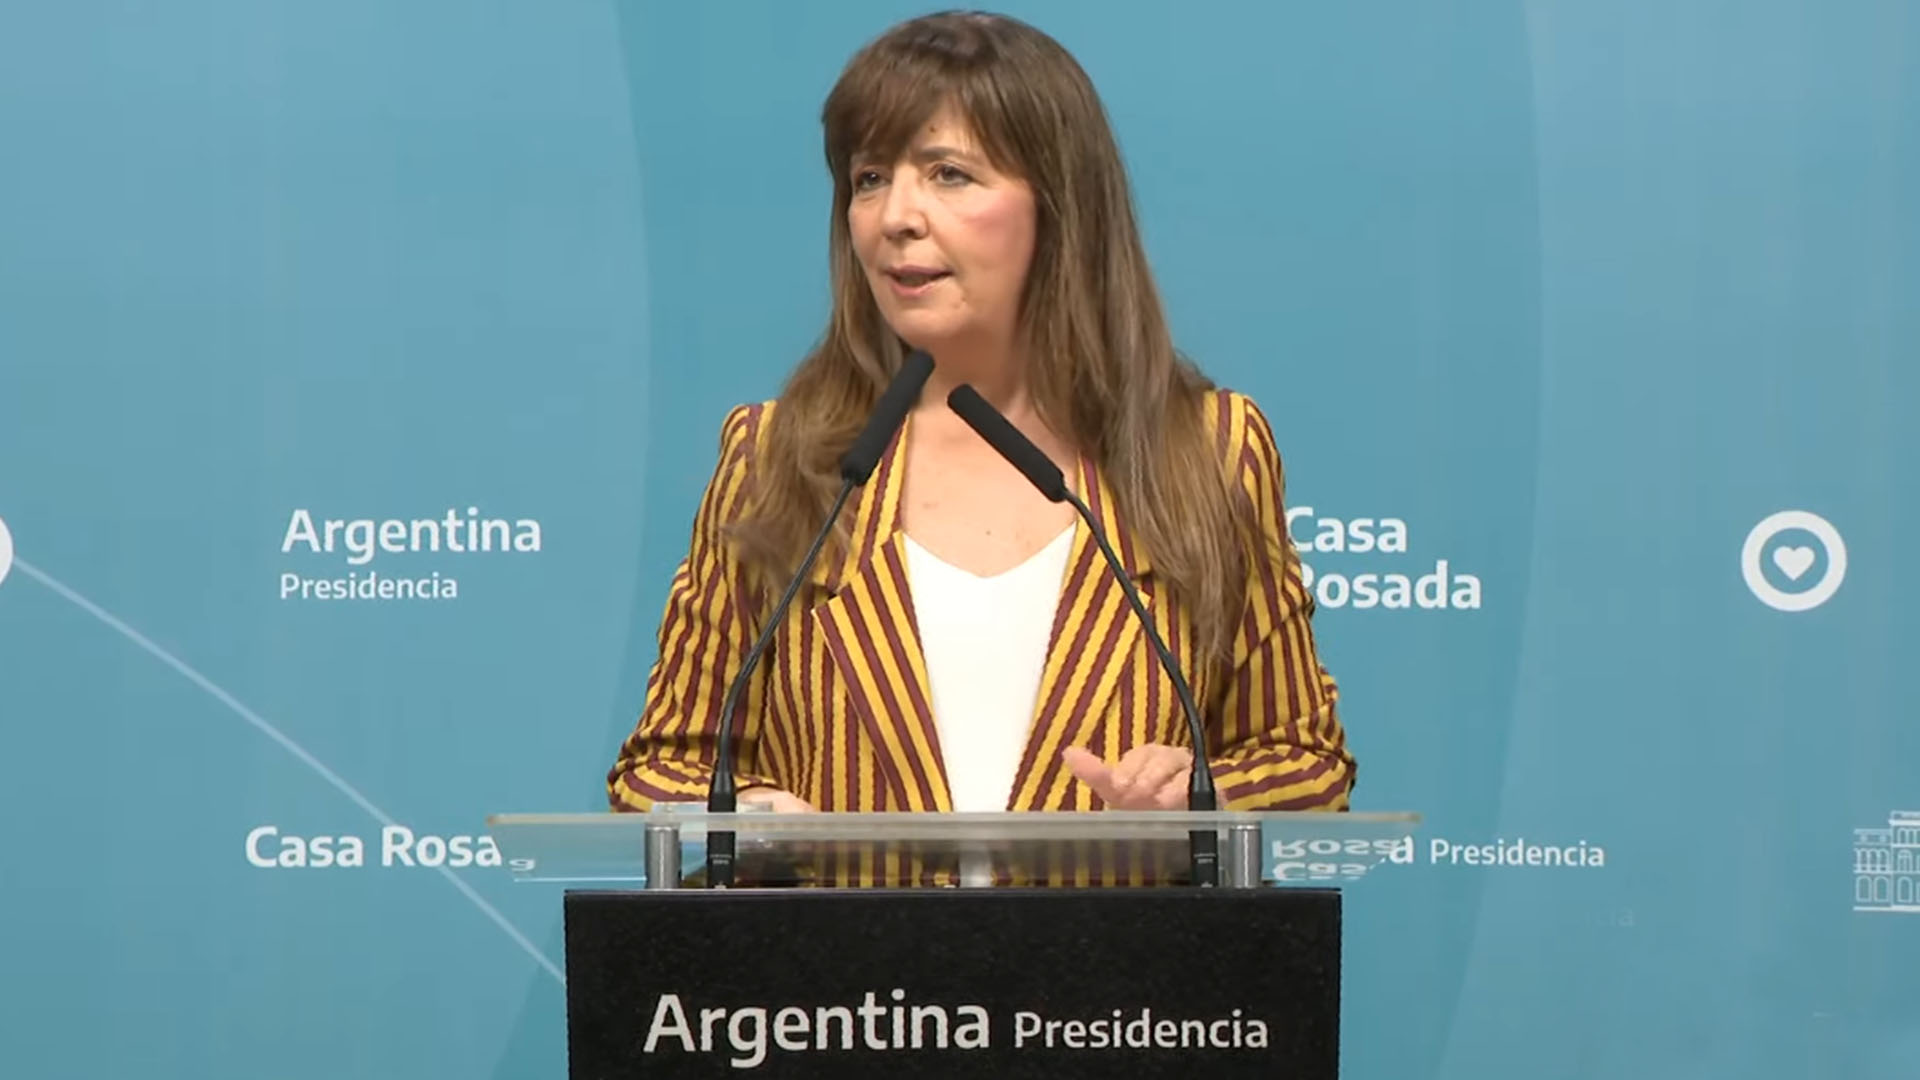 The spokesperson for the Presidency, Gabriela Cerruti